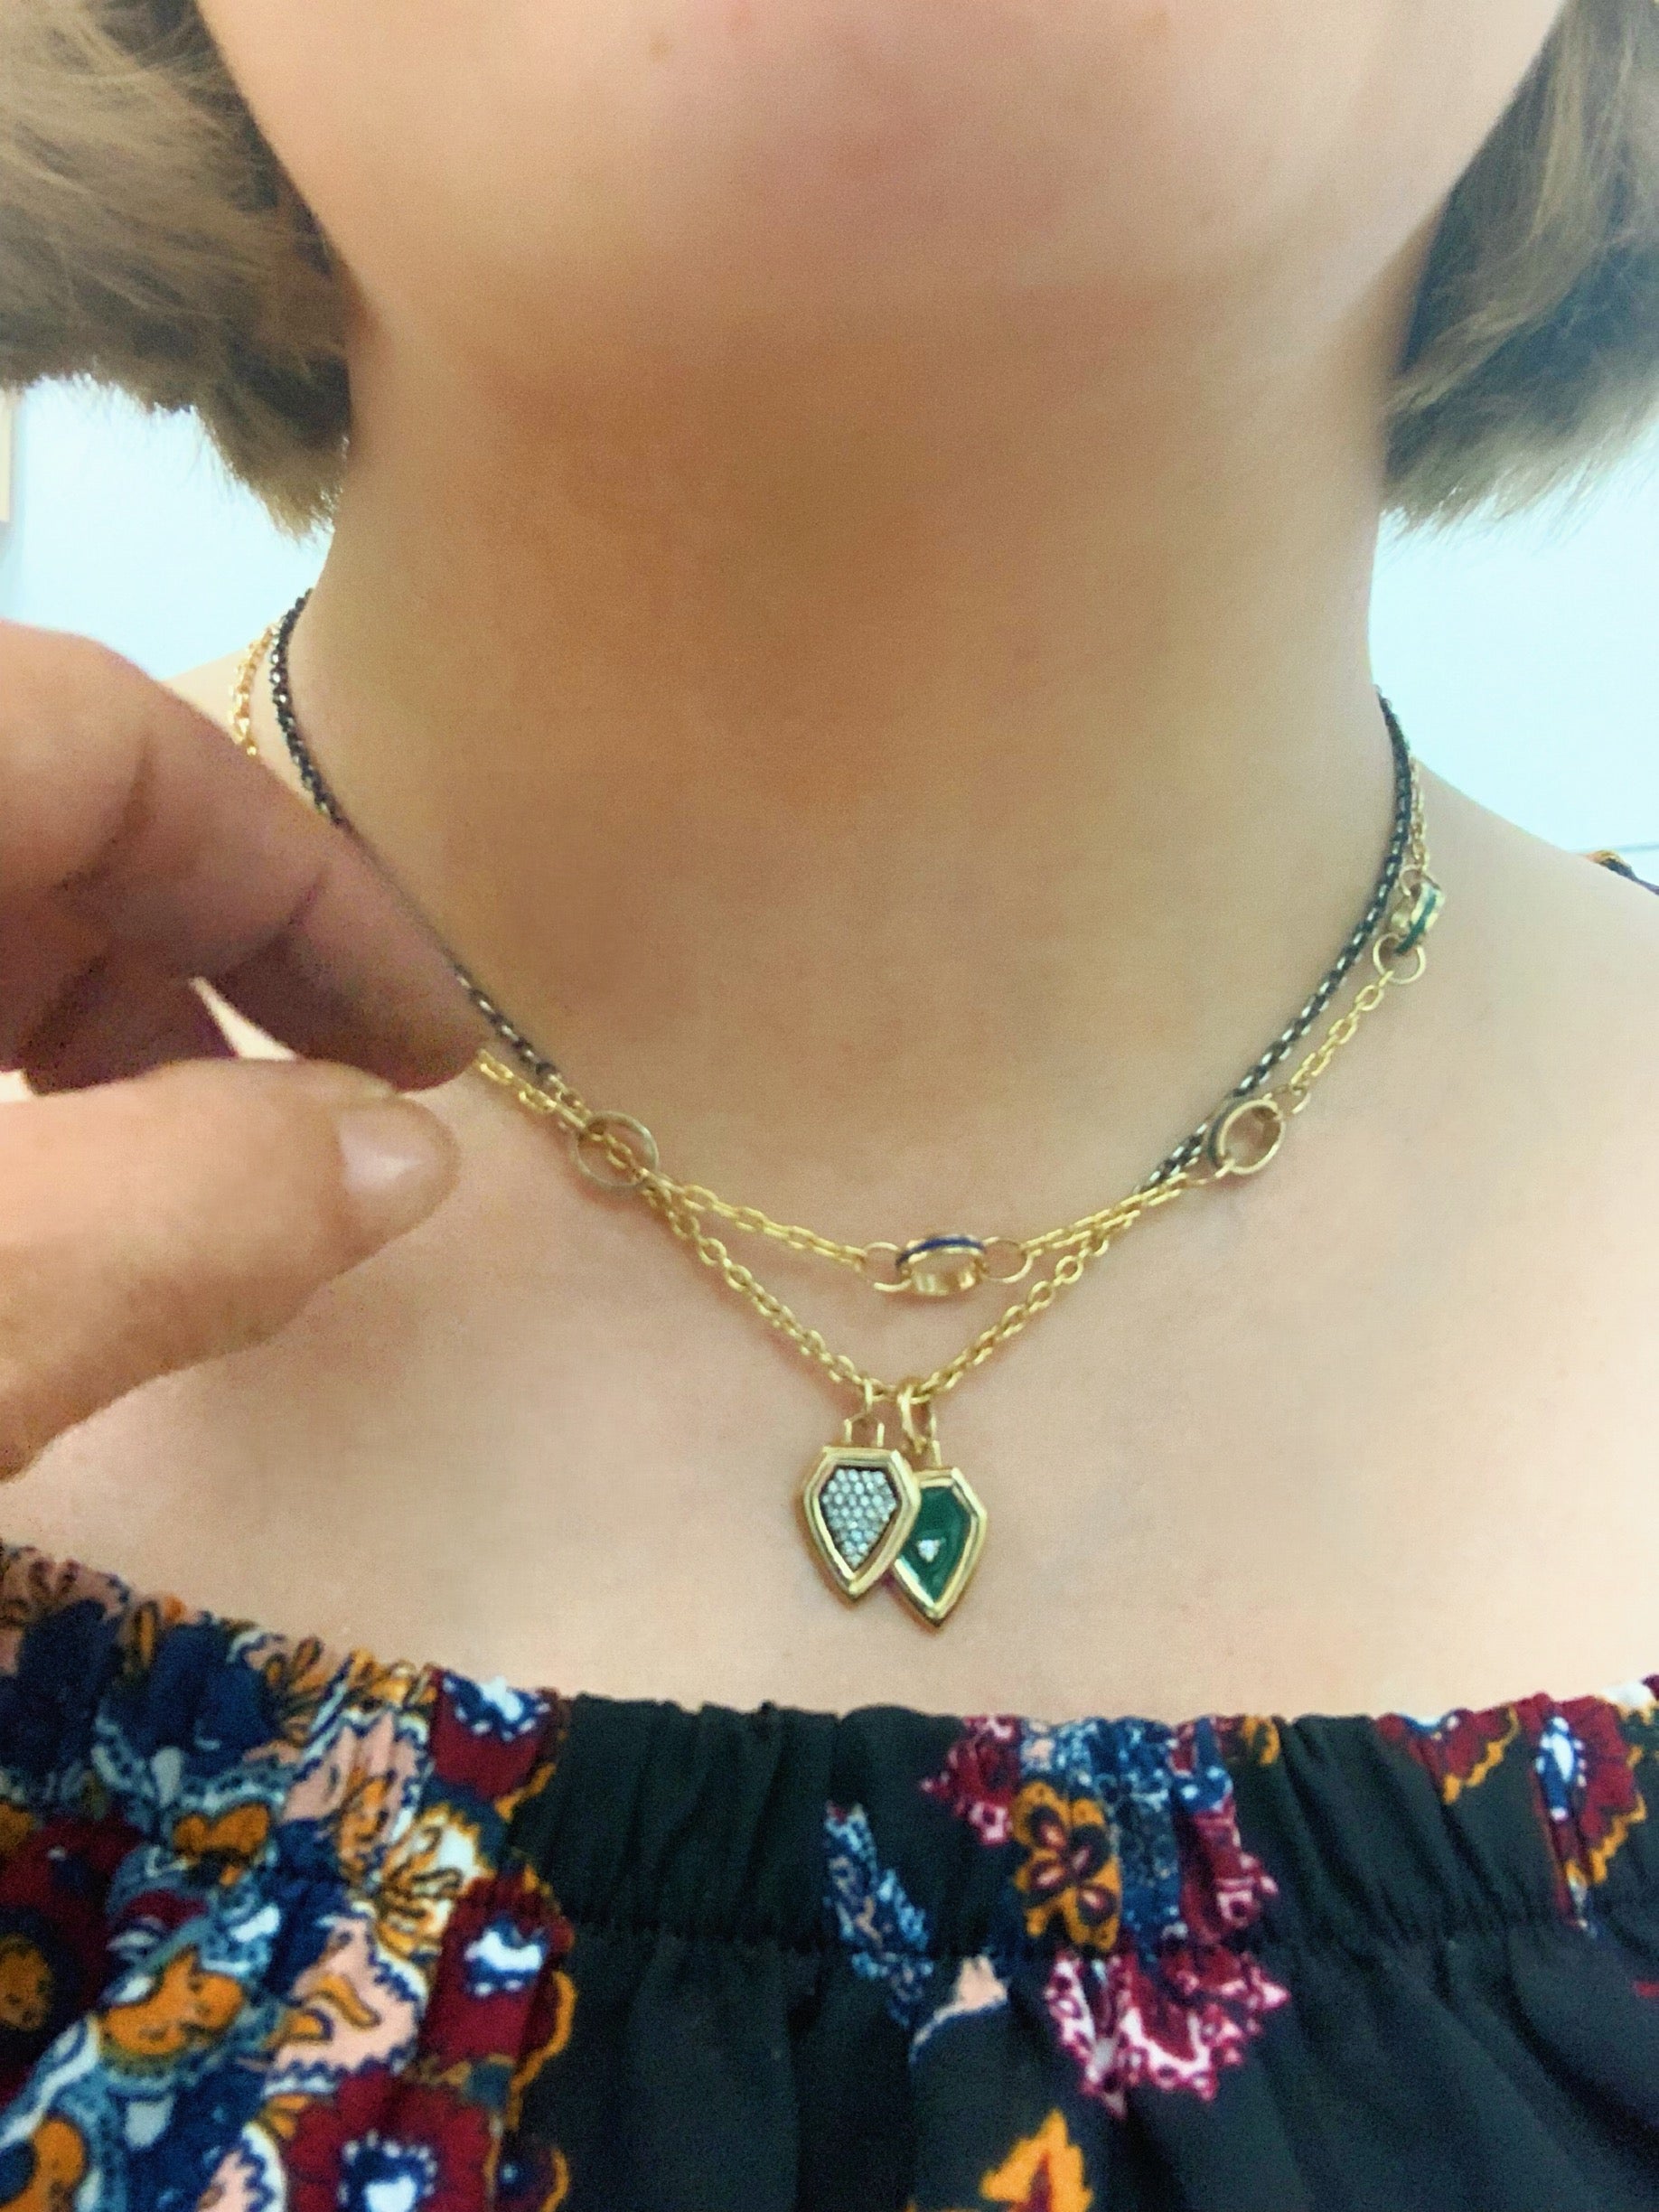 Arch Mini Shield Necklace: 14k Gold, Oxidized Silver, Diamonds